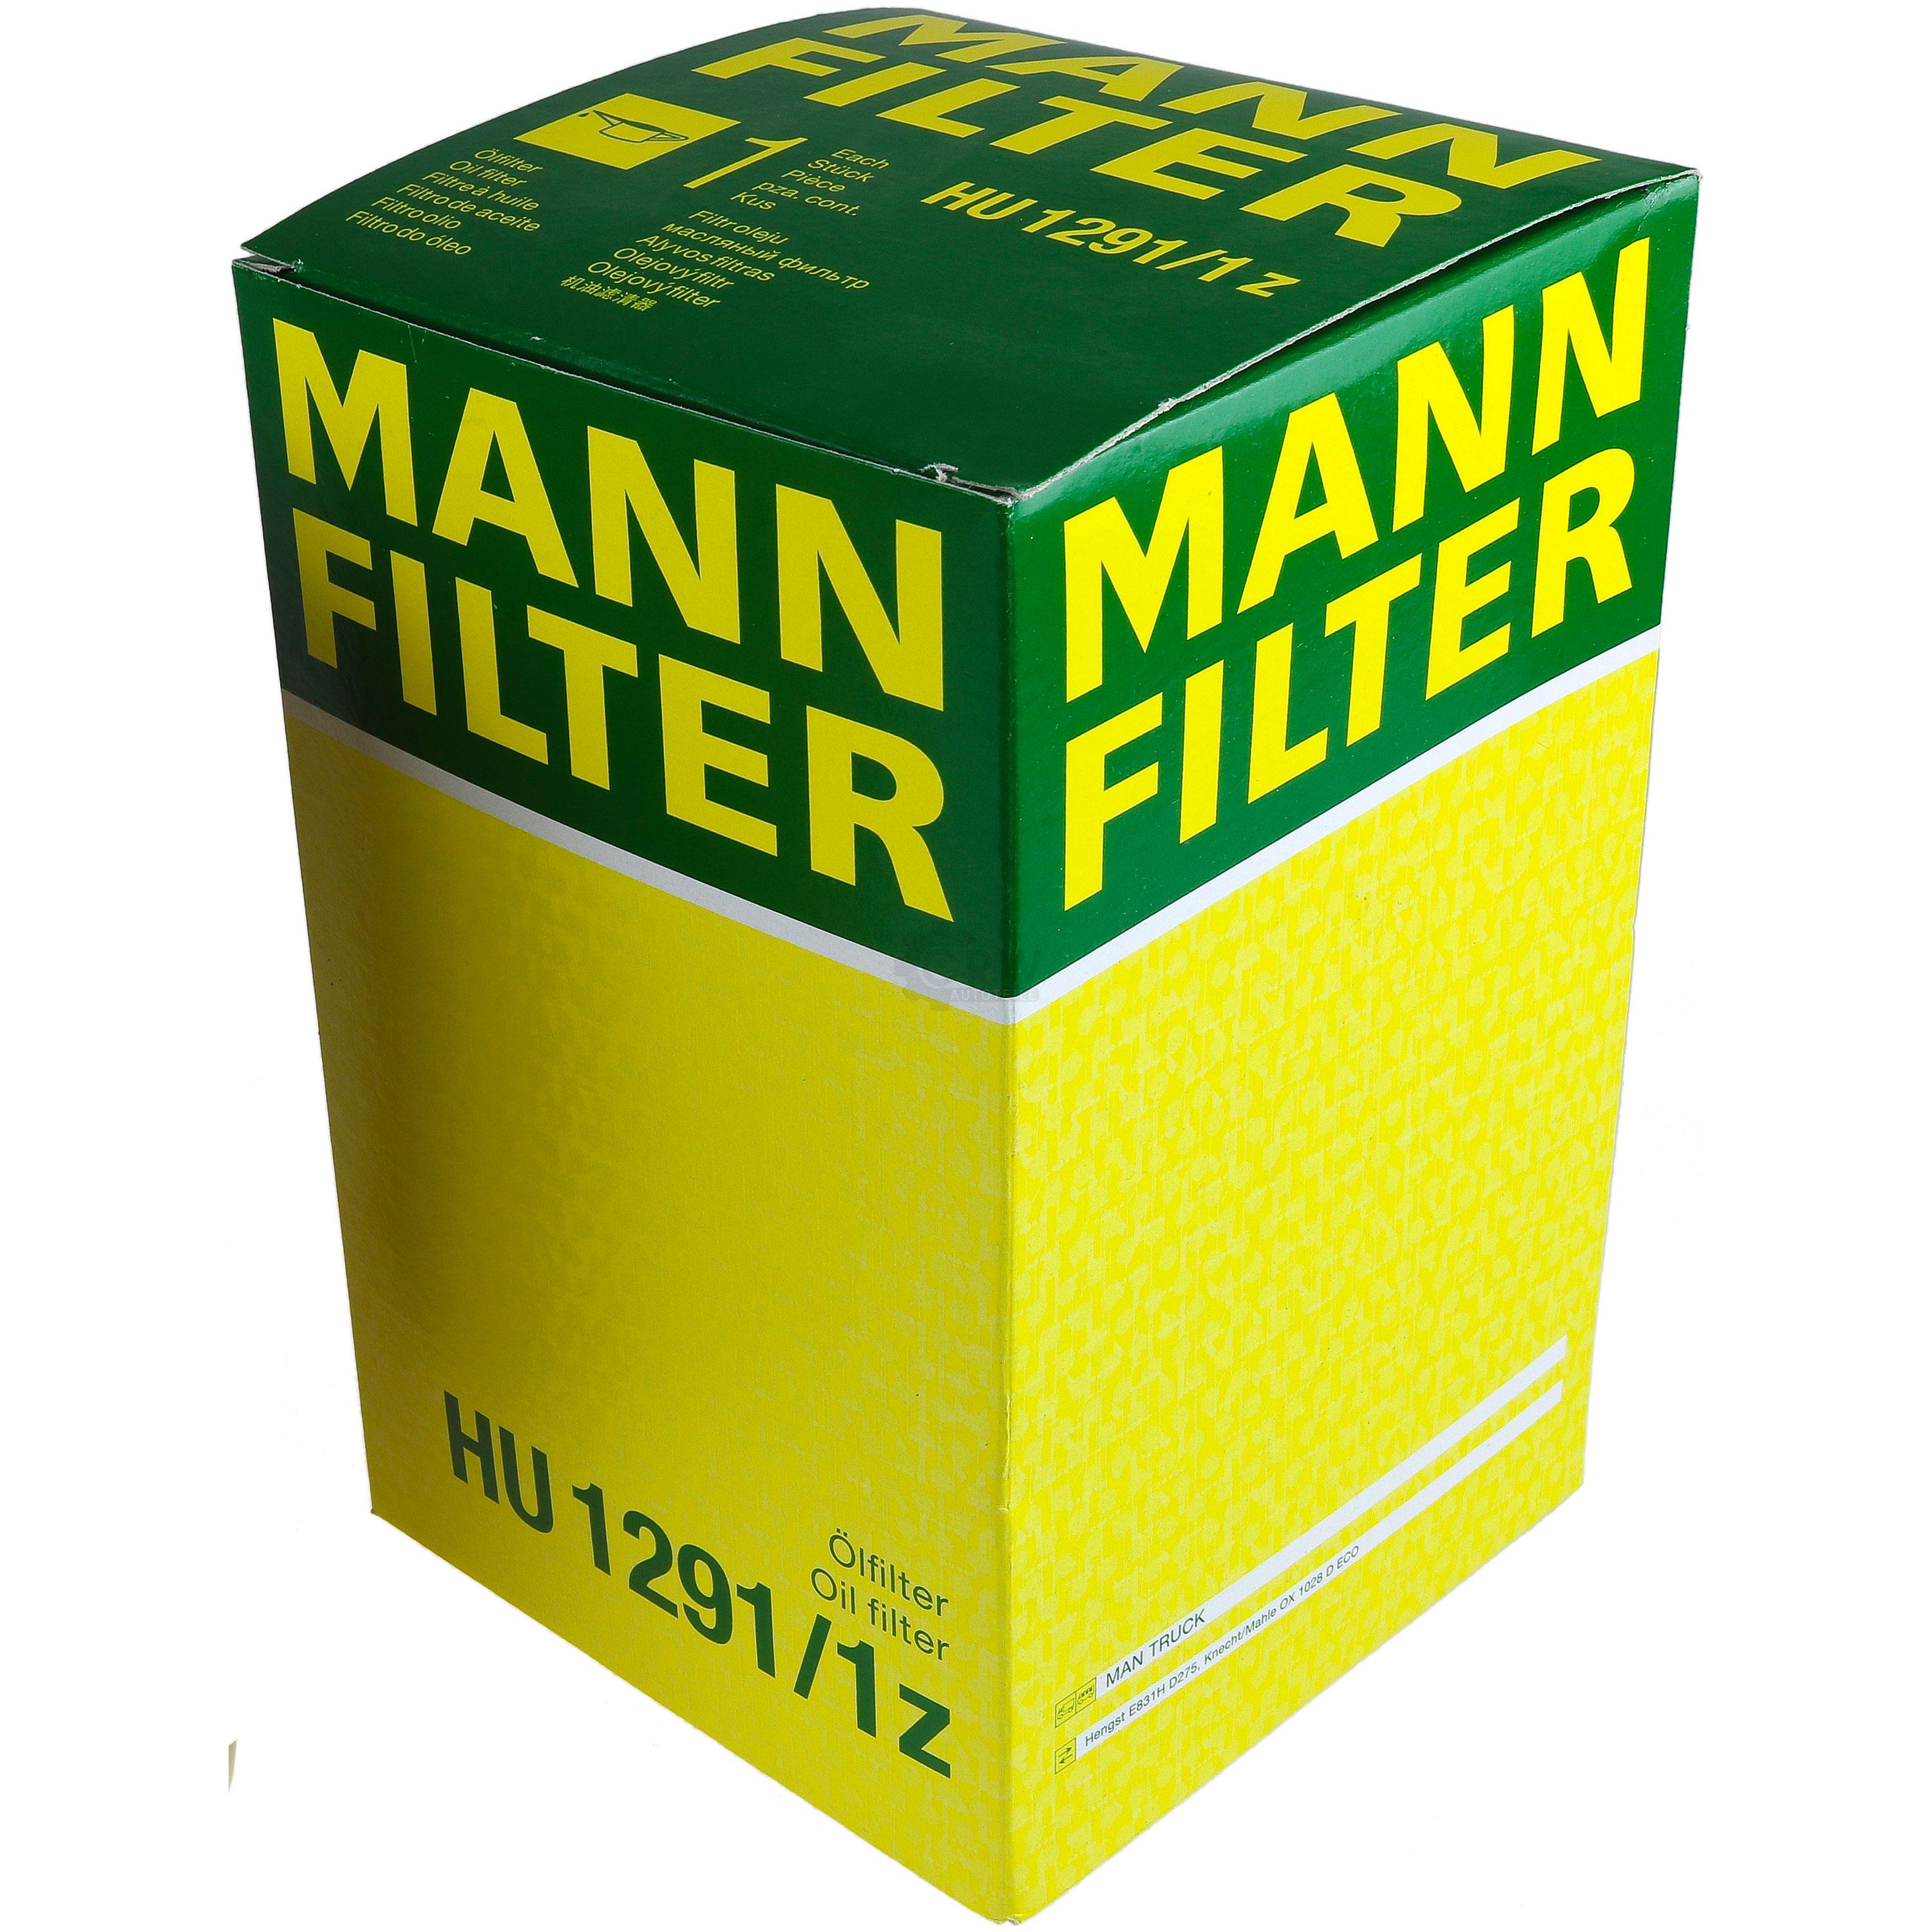 MANN-FILTER Ölfilter HU 1291/1 z Oil Filter